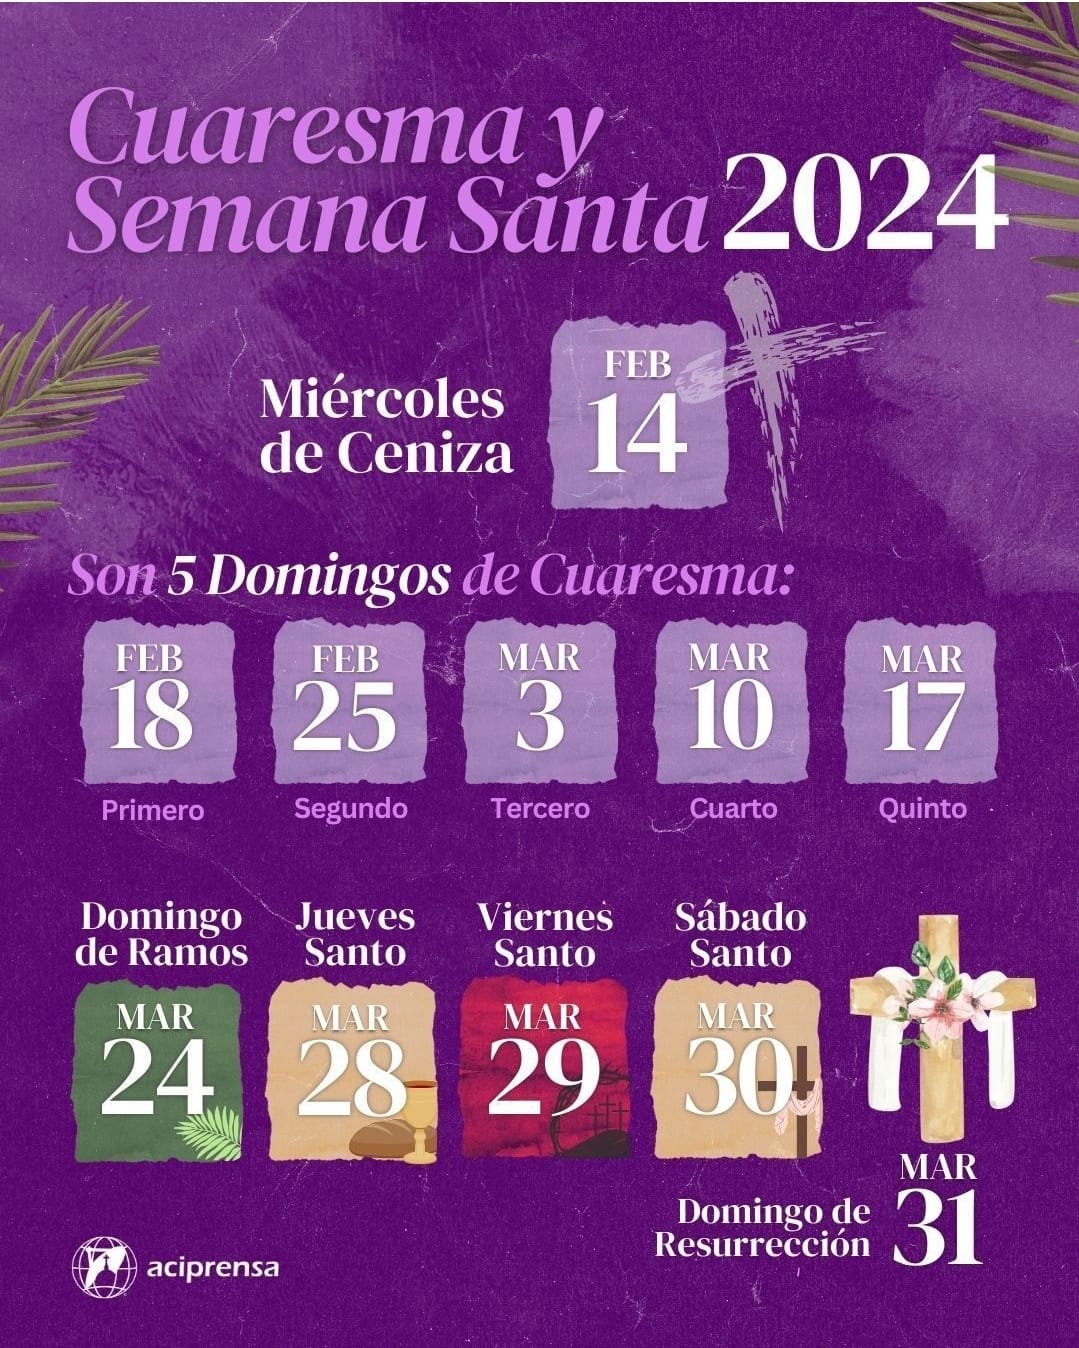 Semana Santa 2024 El próximo 14 de febrero se celebra el miércoles de